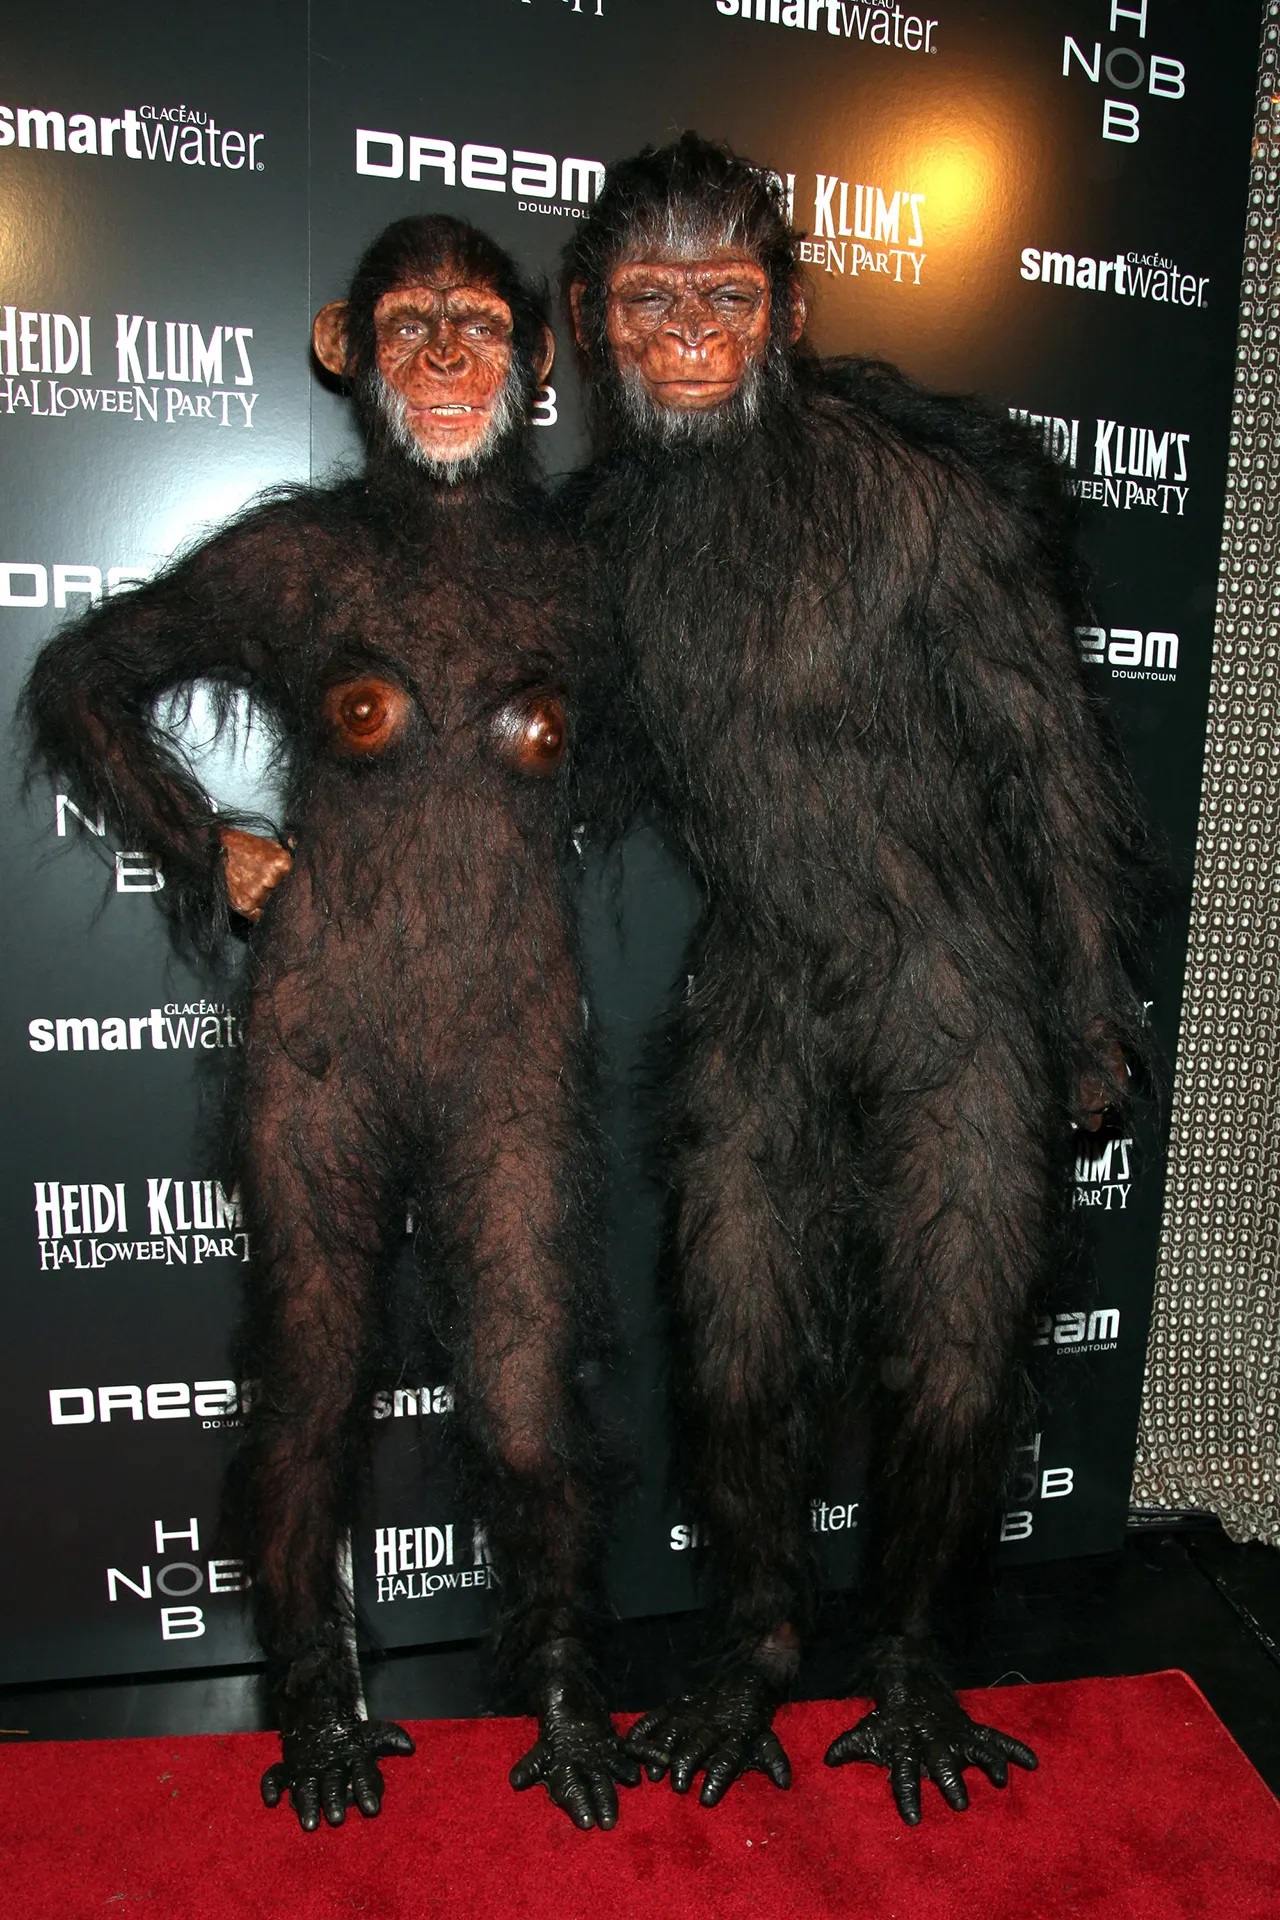 Heidi Klum Planet of the Apes Costume